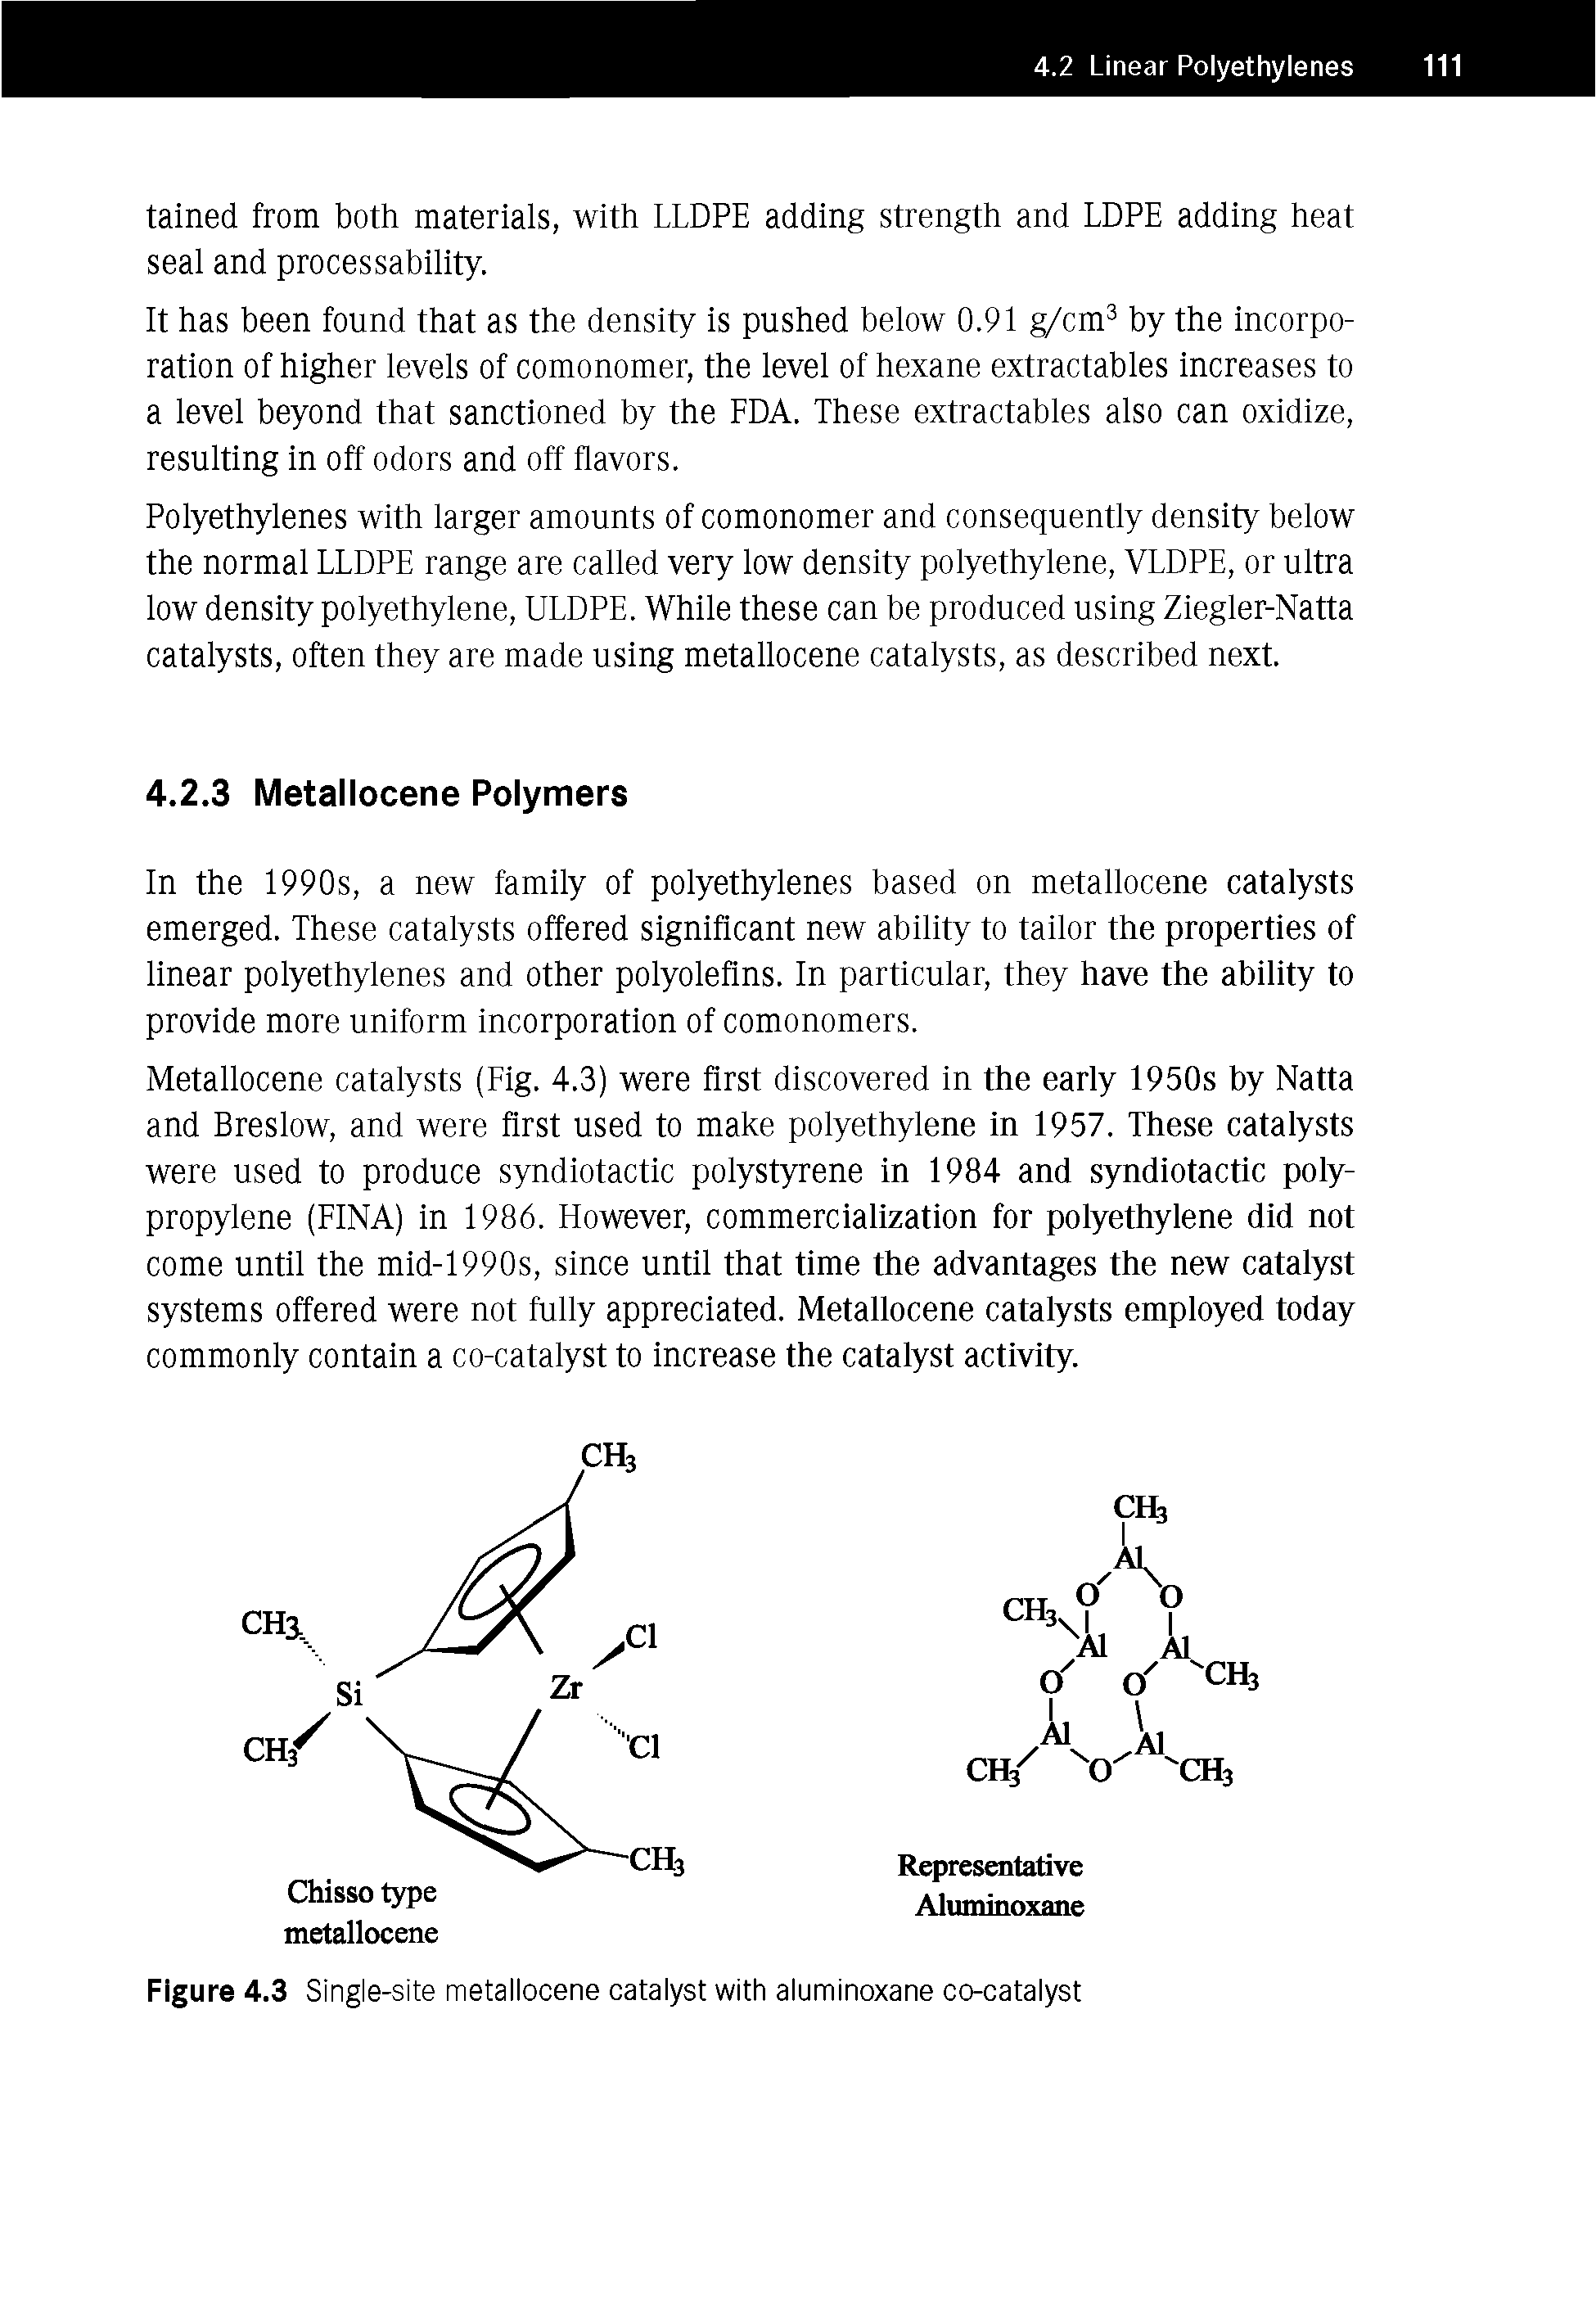 Figure 4.3 Single-site metallocene catalyst with aluminoxane co-catalyst...